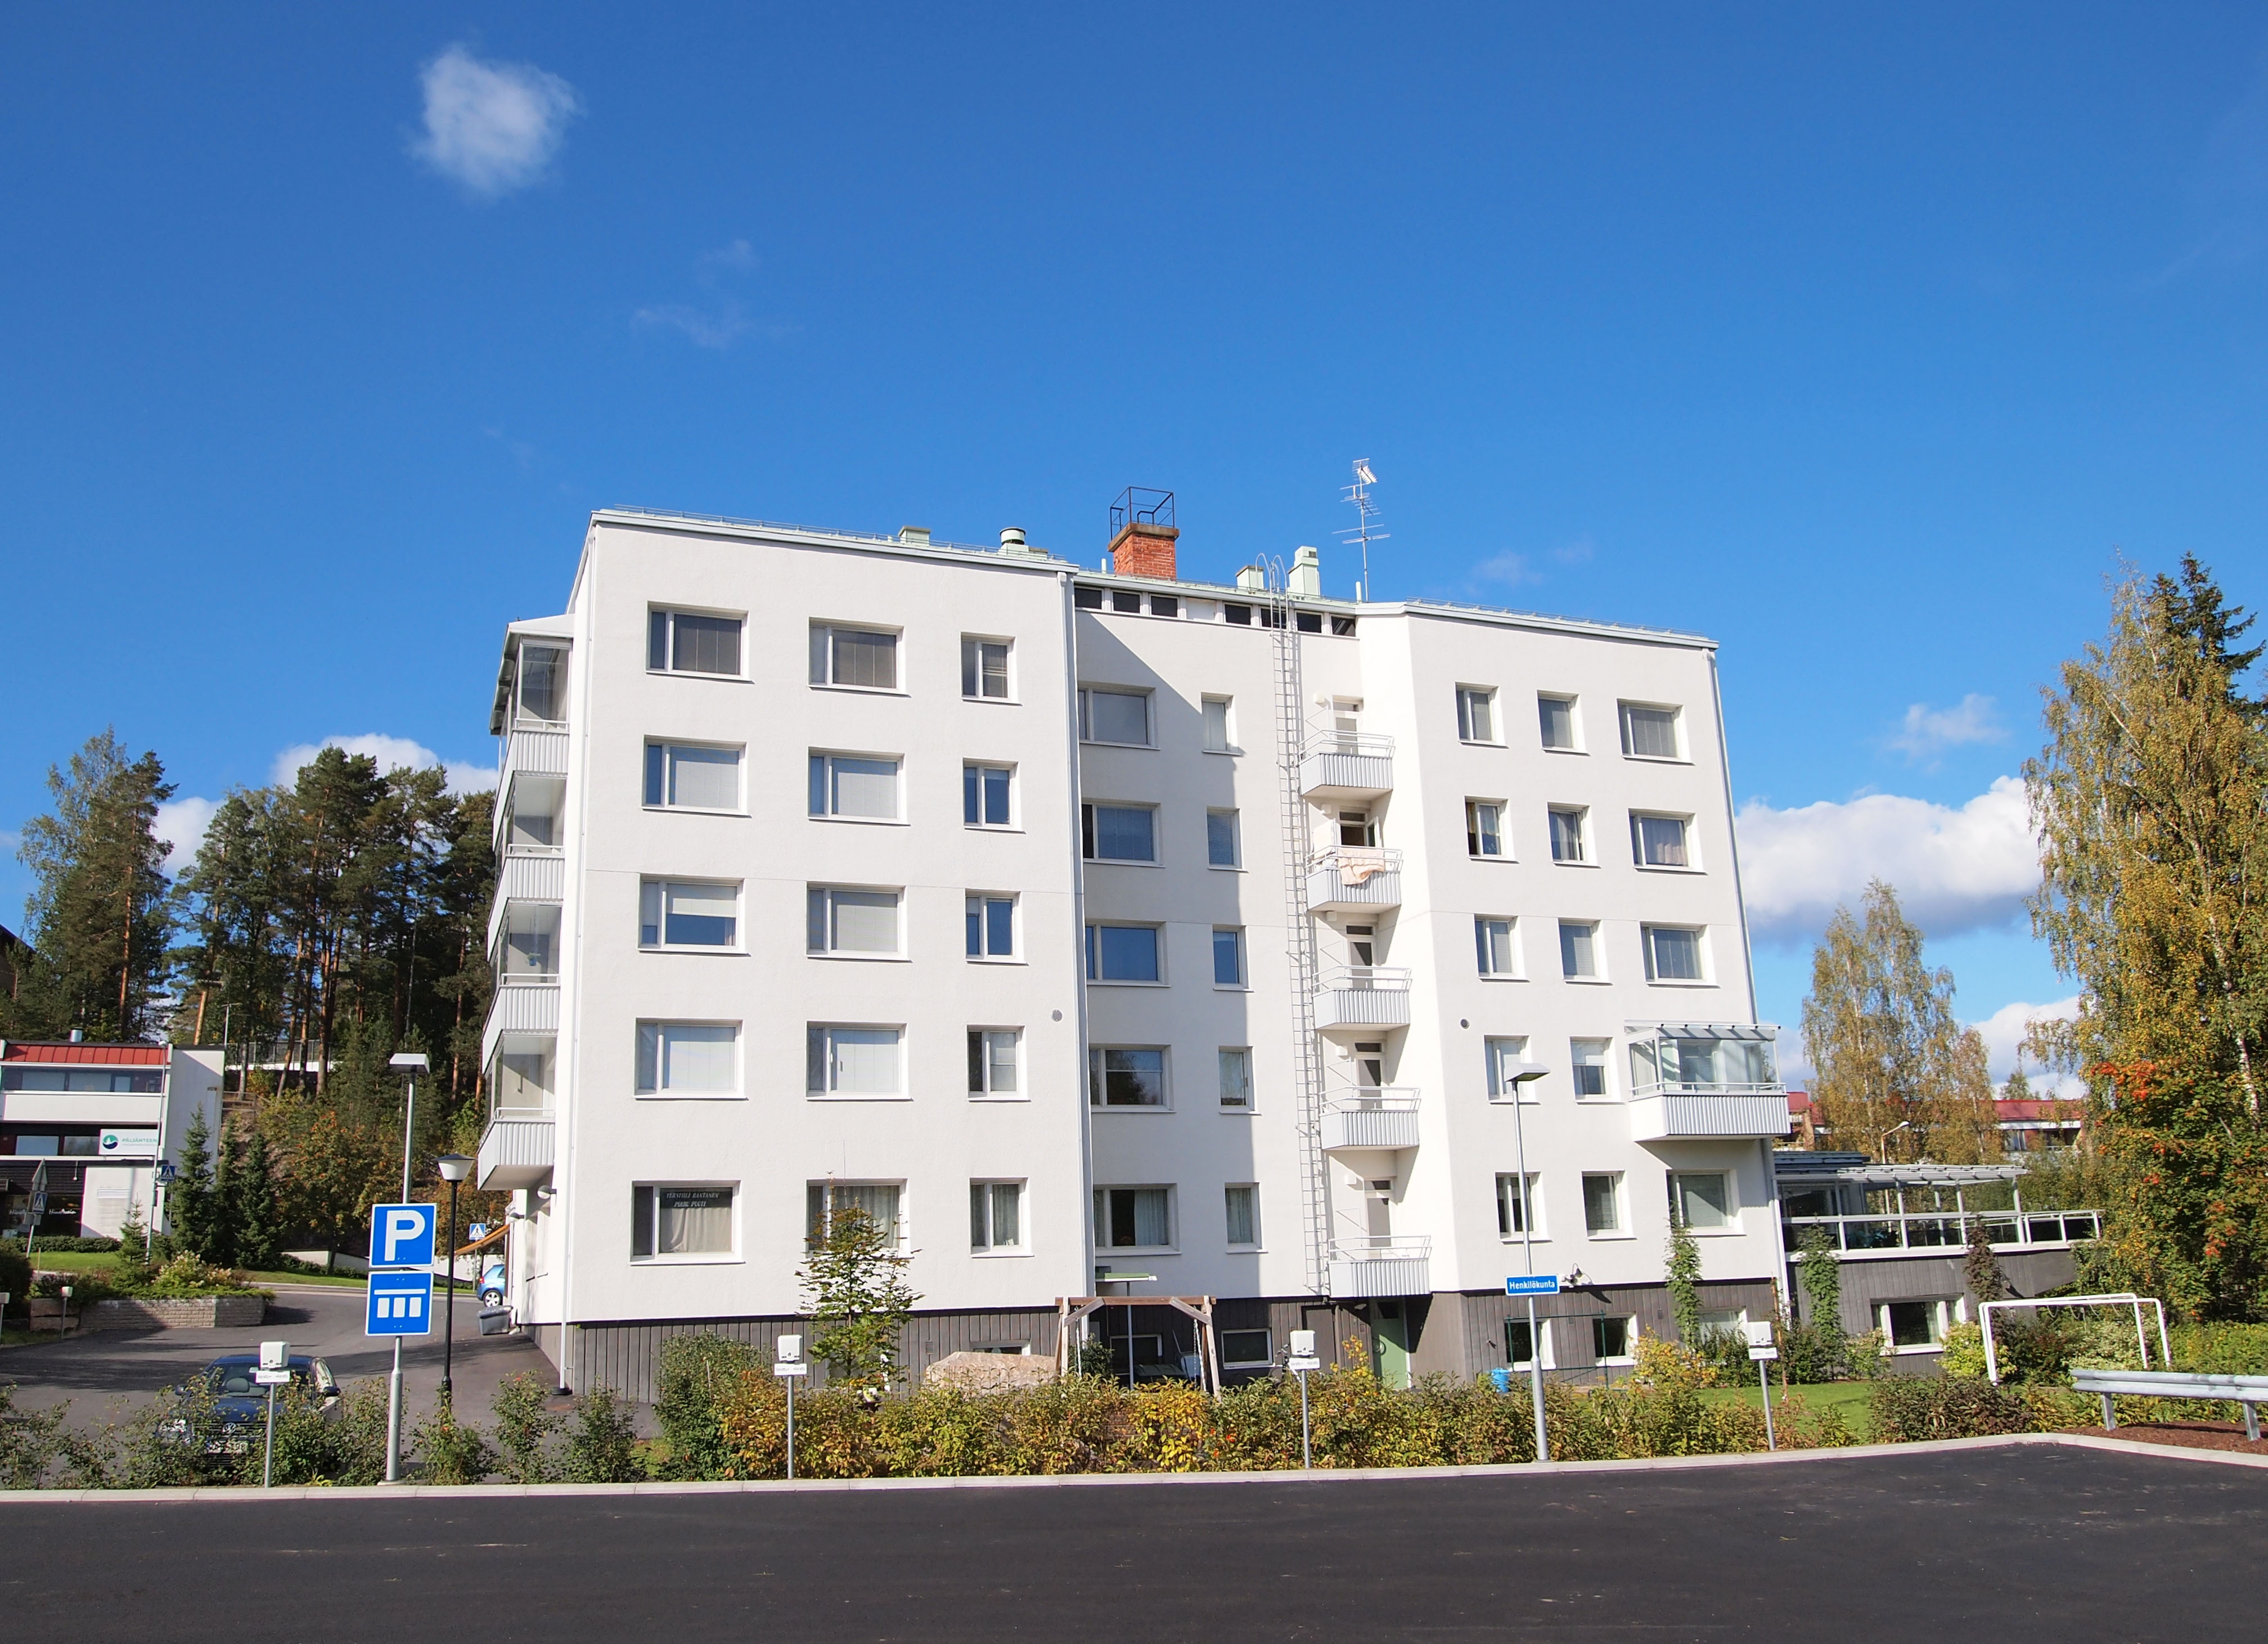 File:Korpilahti - white building.jpg - Wikimedia Commons